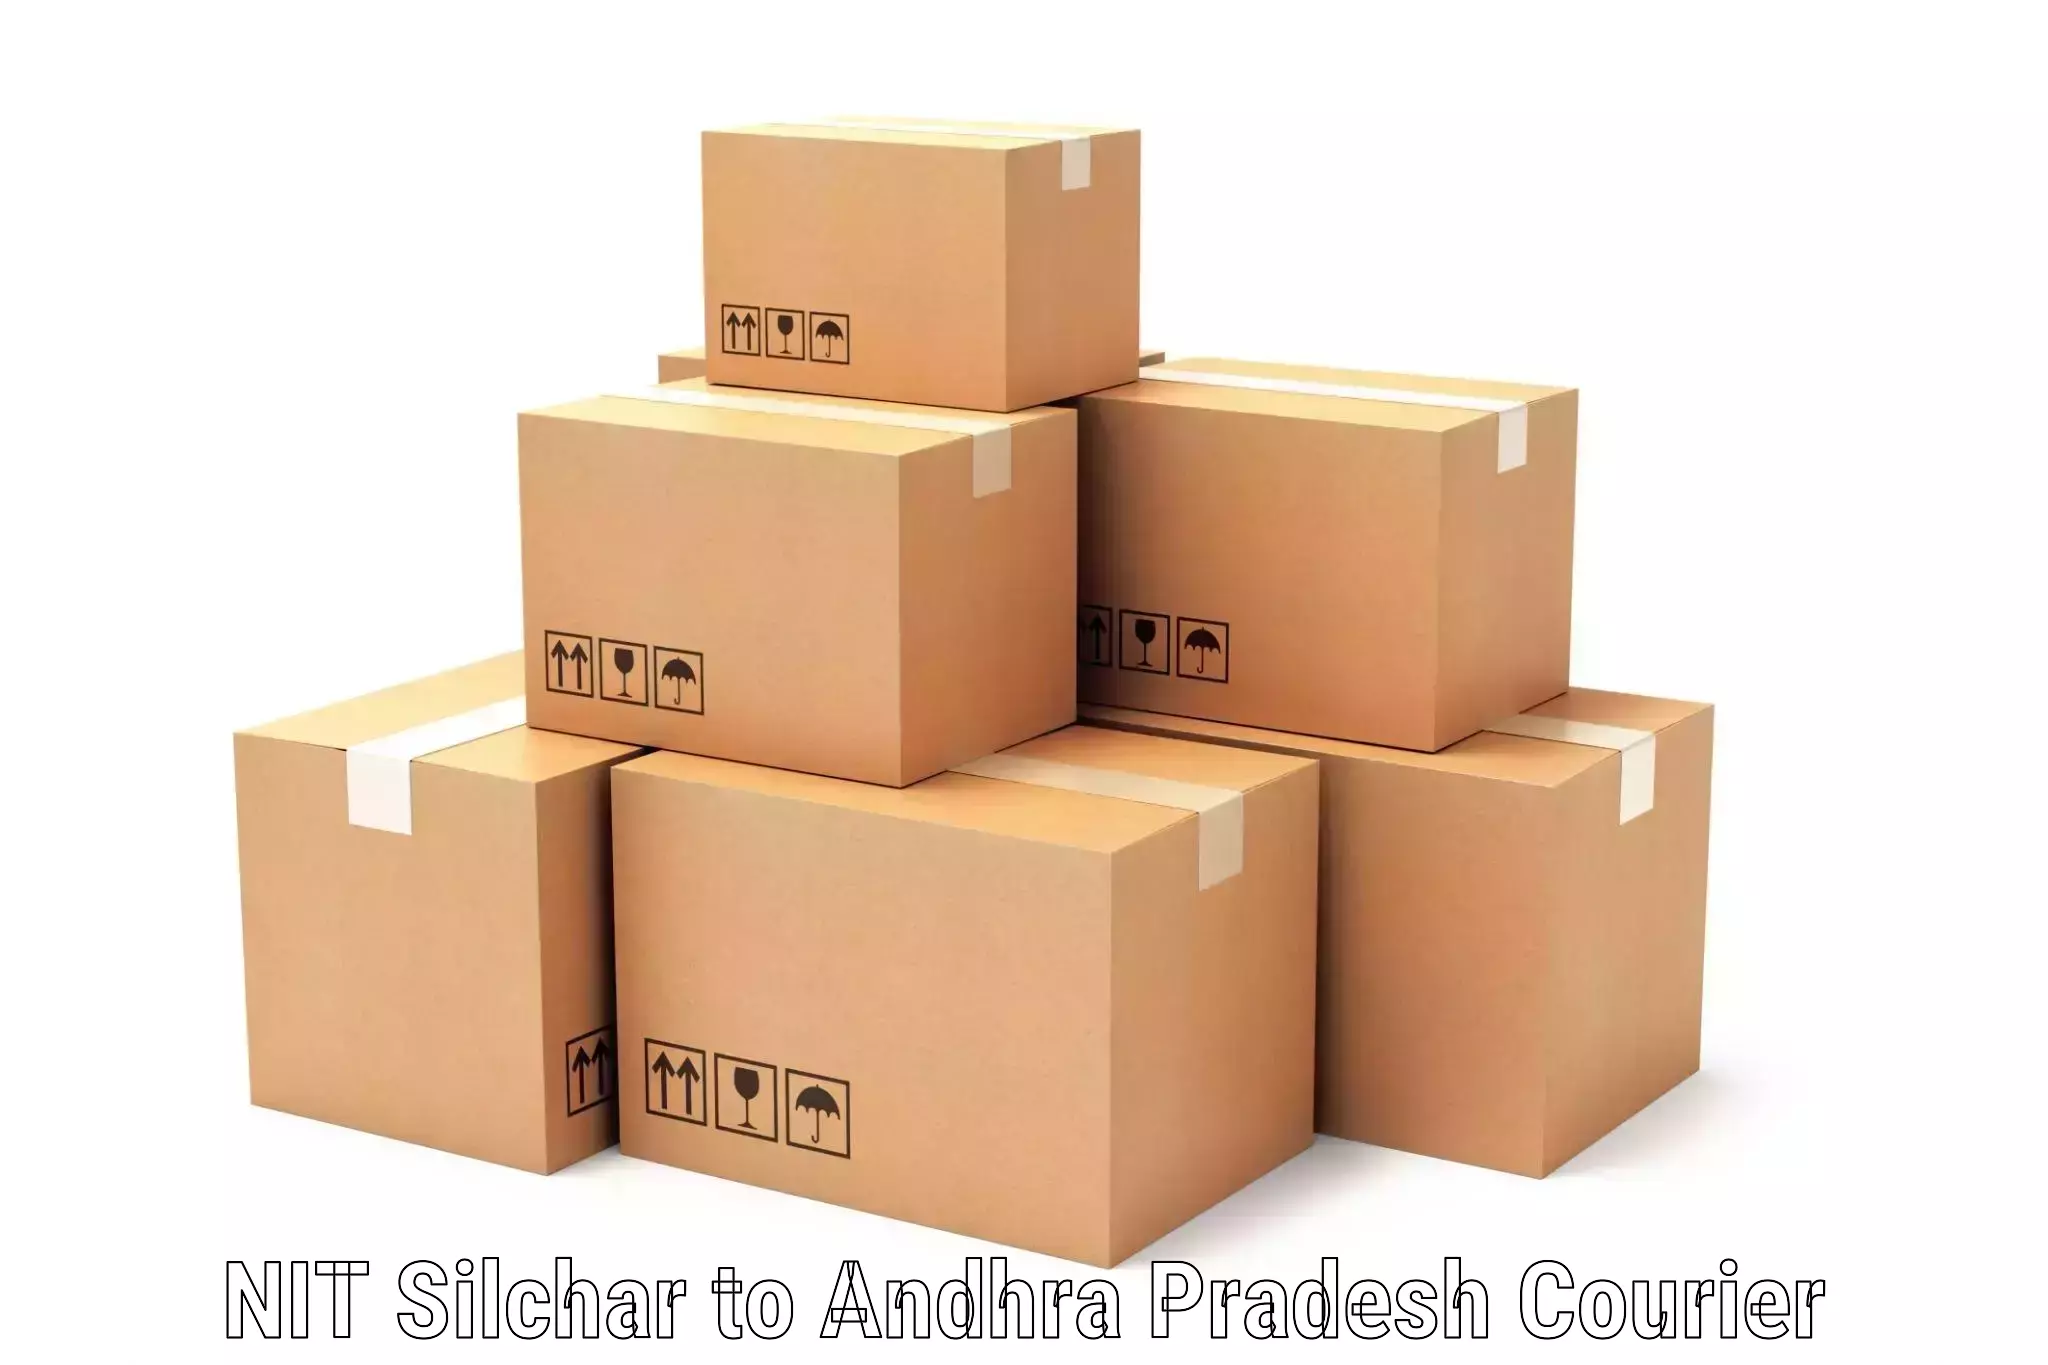 Cash on delivery service NIT Silchar to Amalapuram